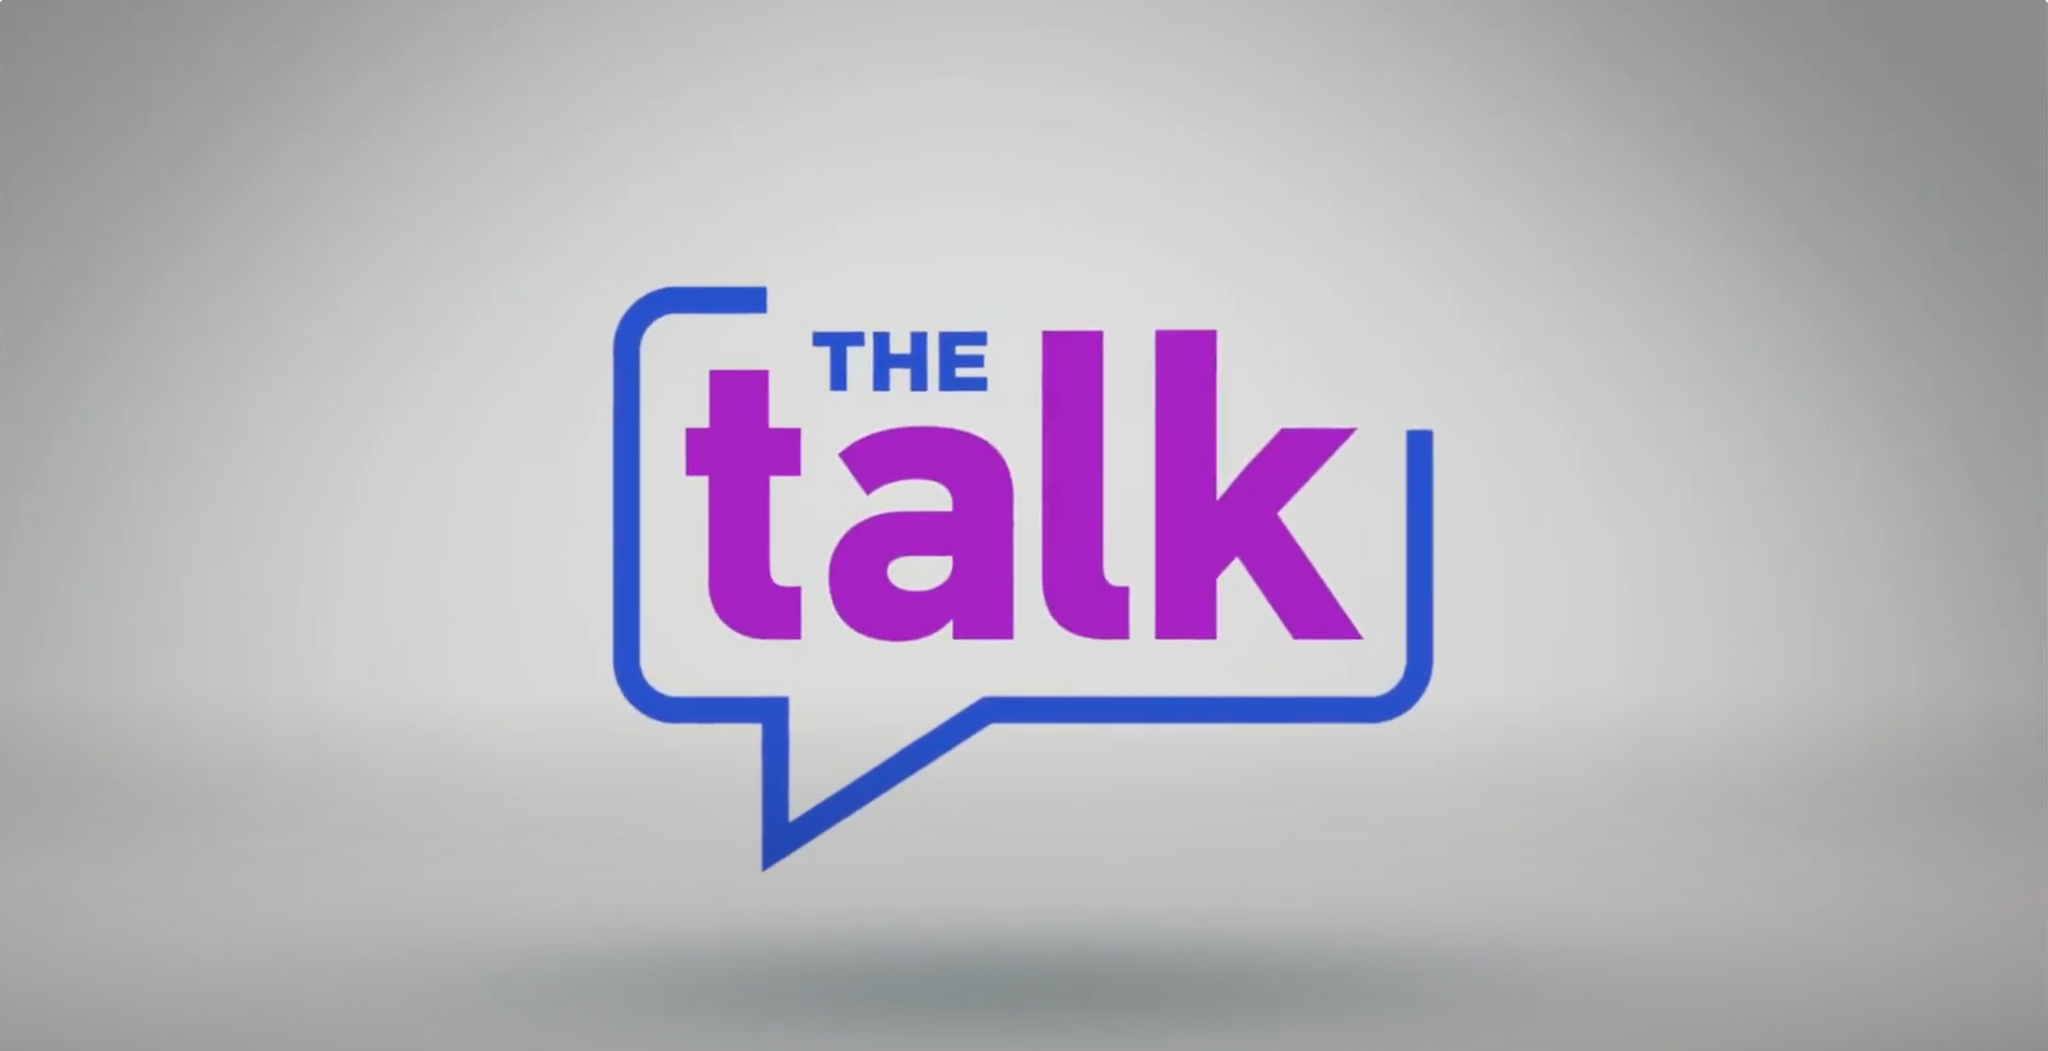 The Talk + Artis Mention